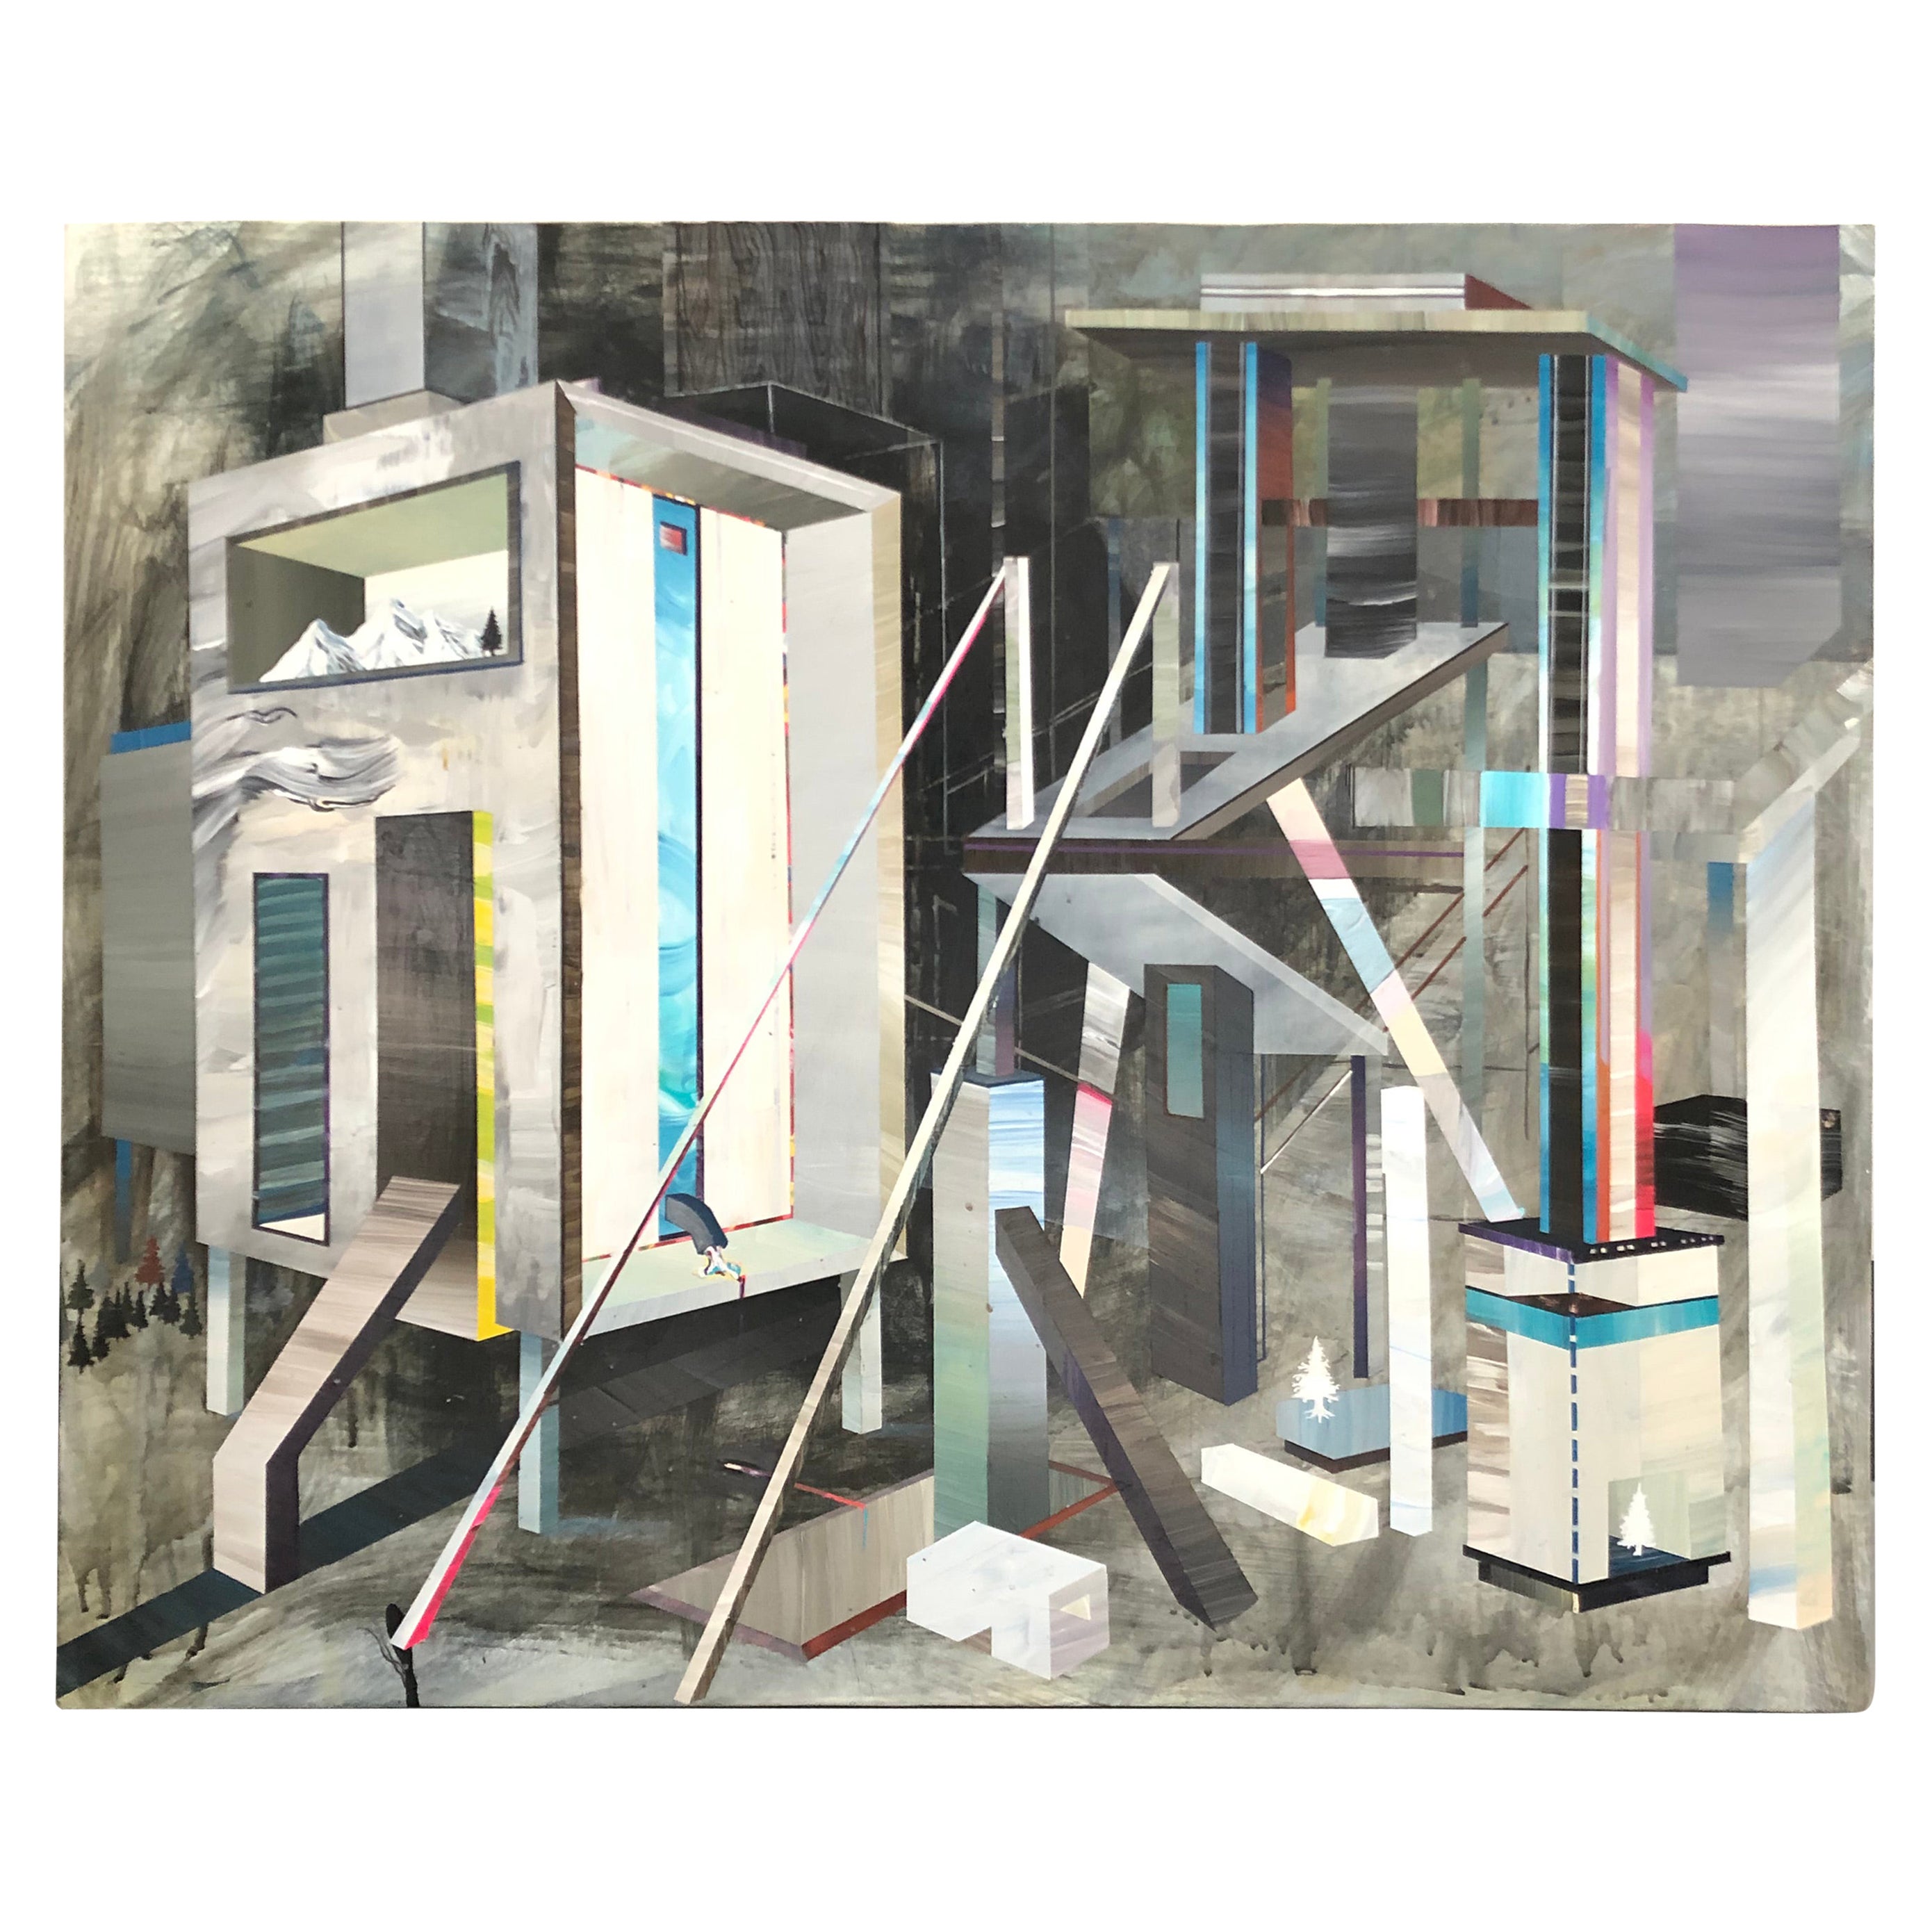 Ricky Allman, ‘Camp’, Collage, Mixed Media on Canvas